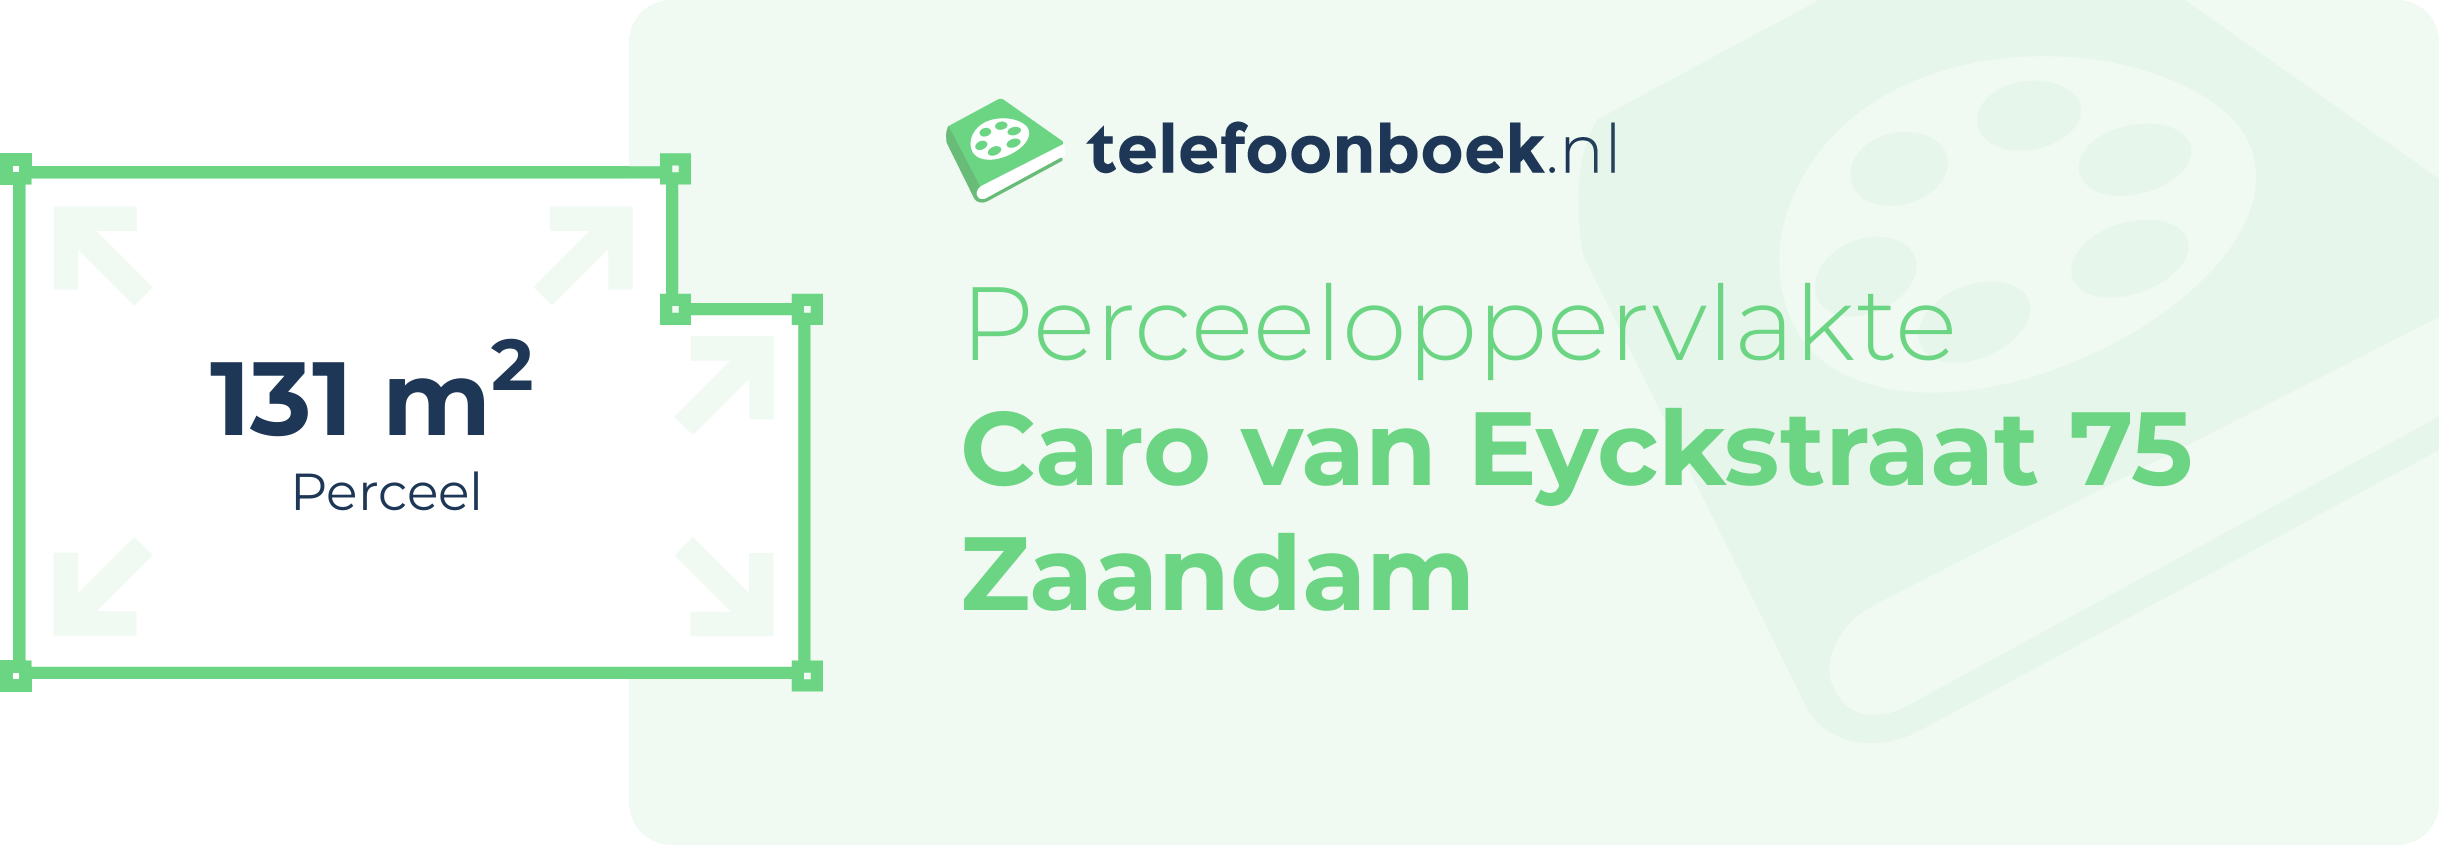 Perceeloppervlakte Caro Van Eyckstraat 75 Zaandam